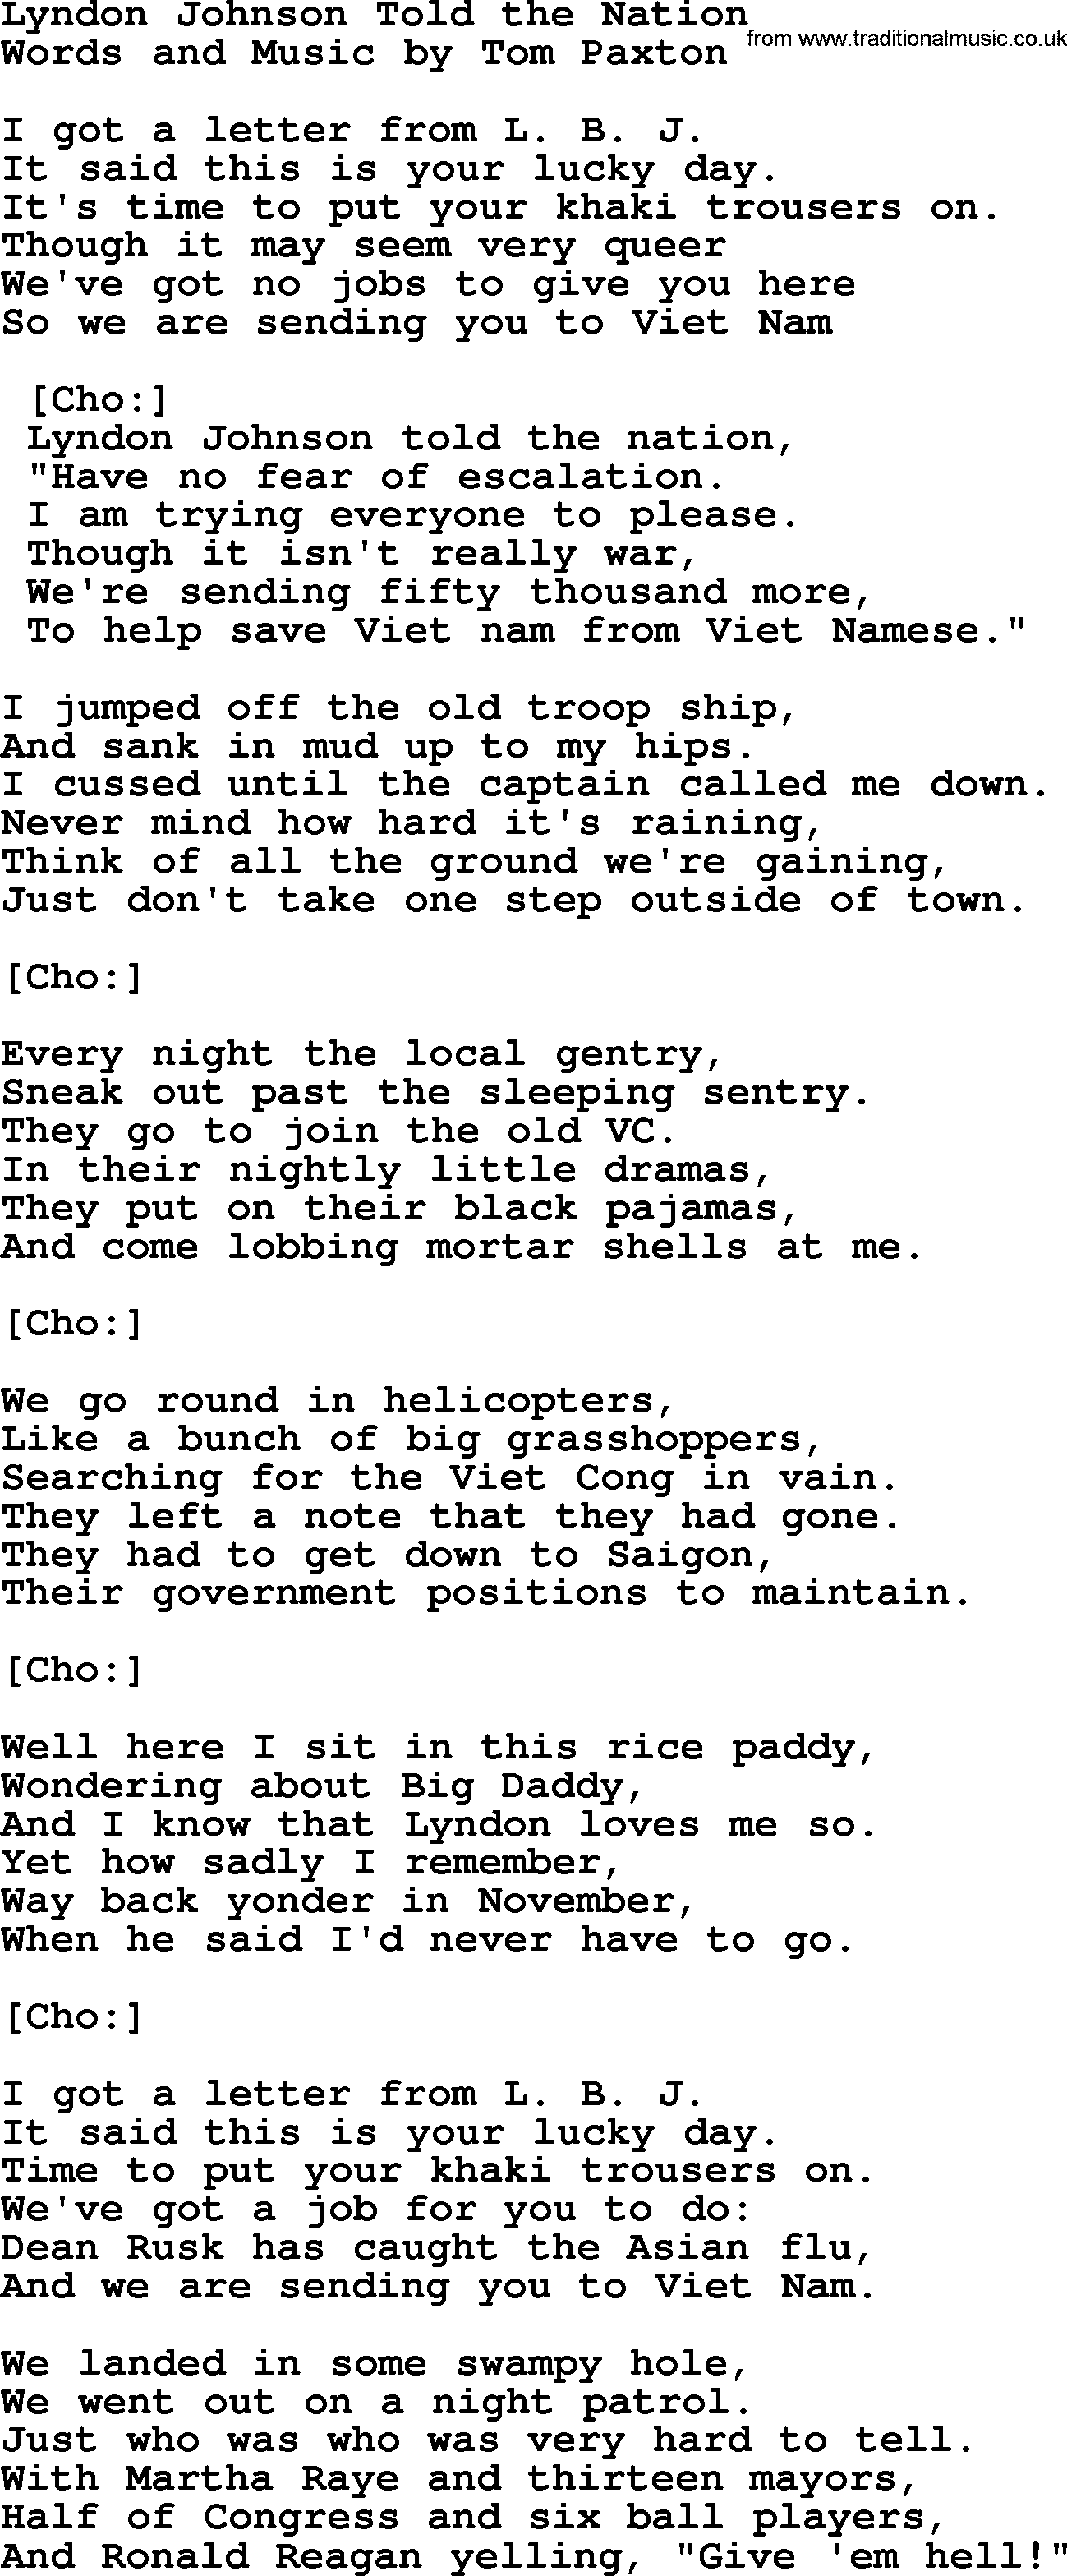 Tom Paxton song: Lyndon Johnson Told The Nation, lyrics